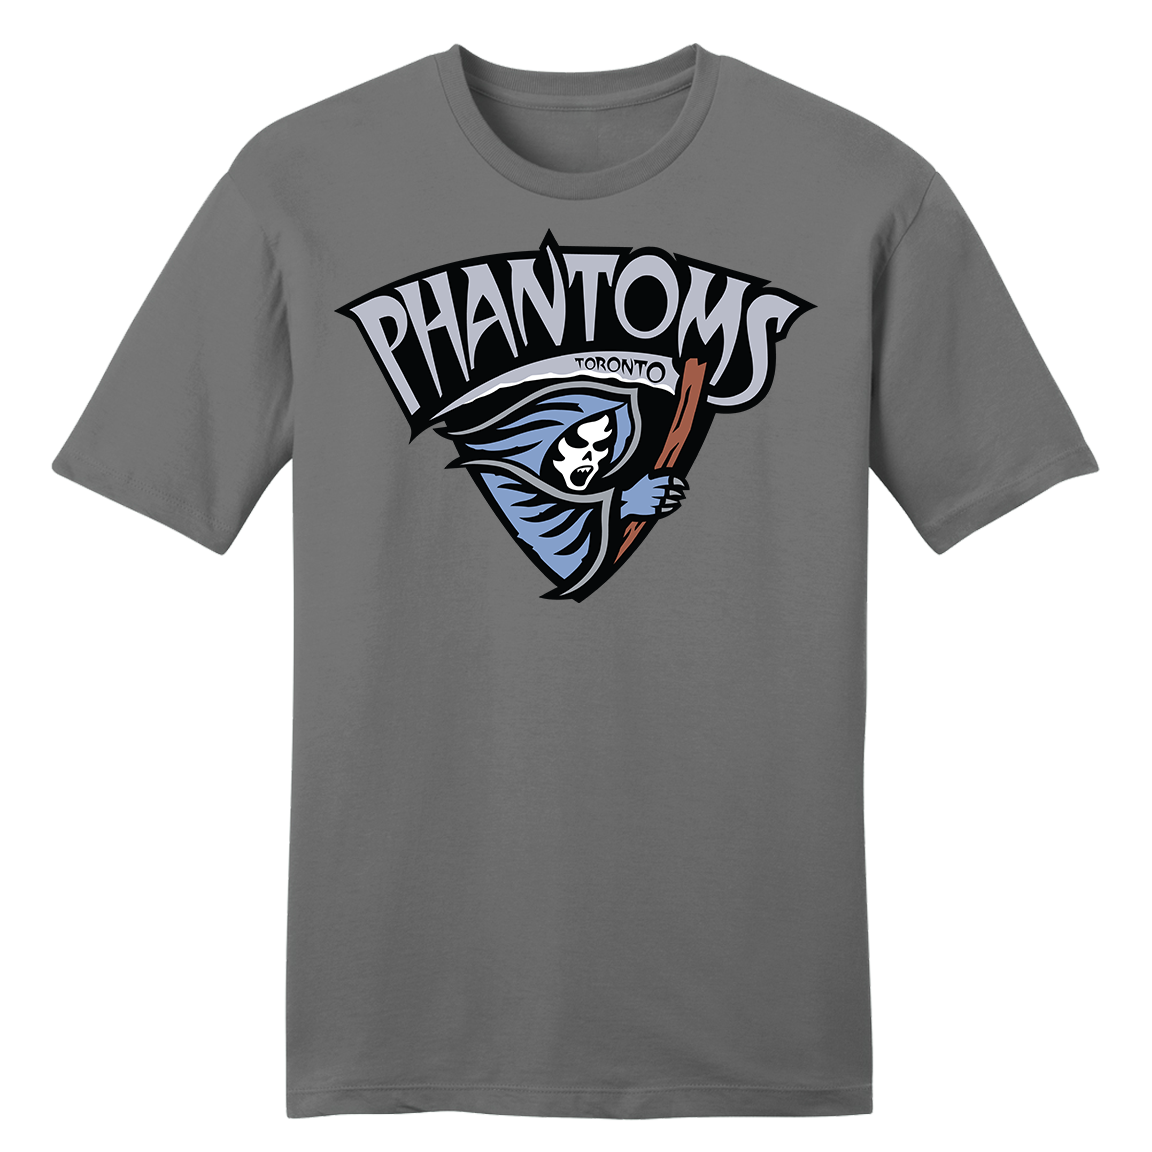 Toronto Phantoms T-shirt Grey